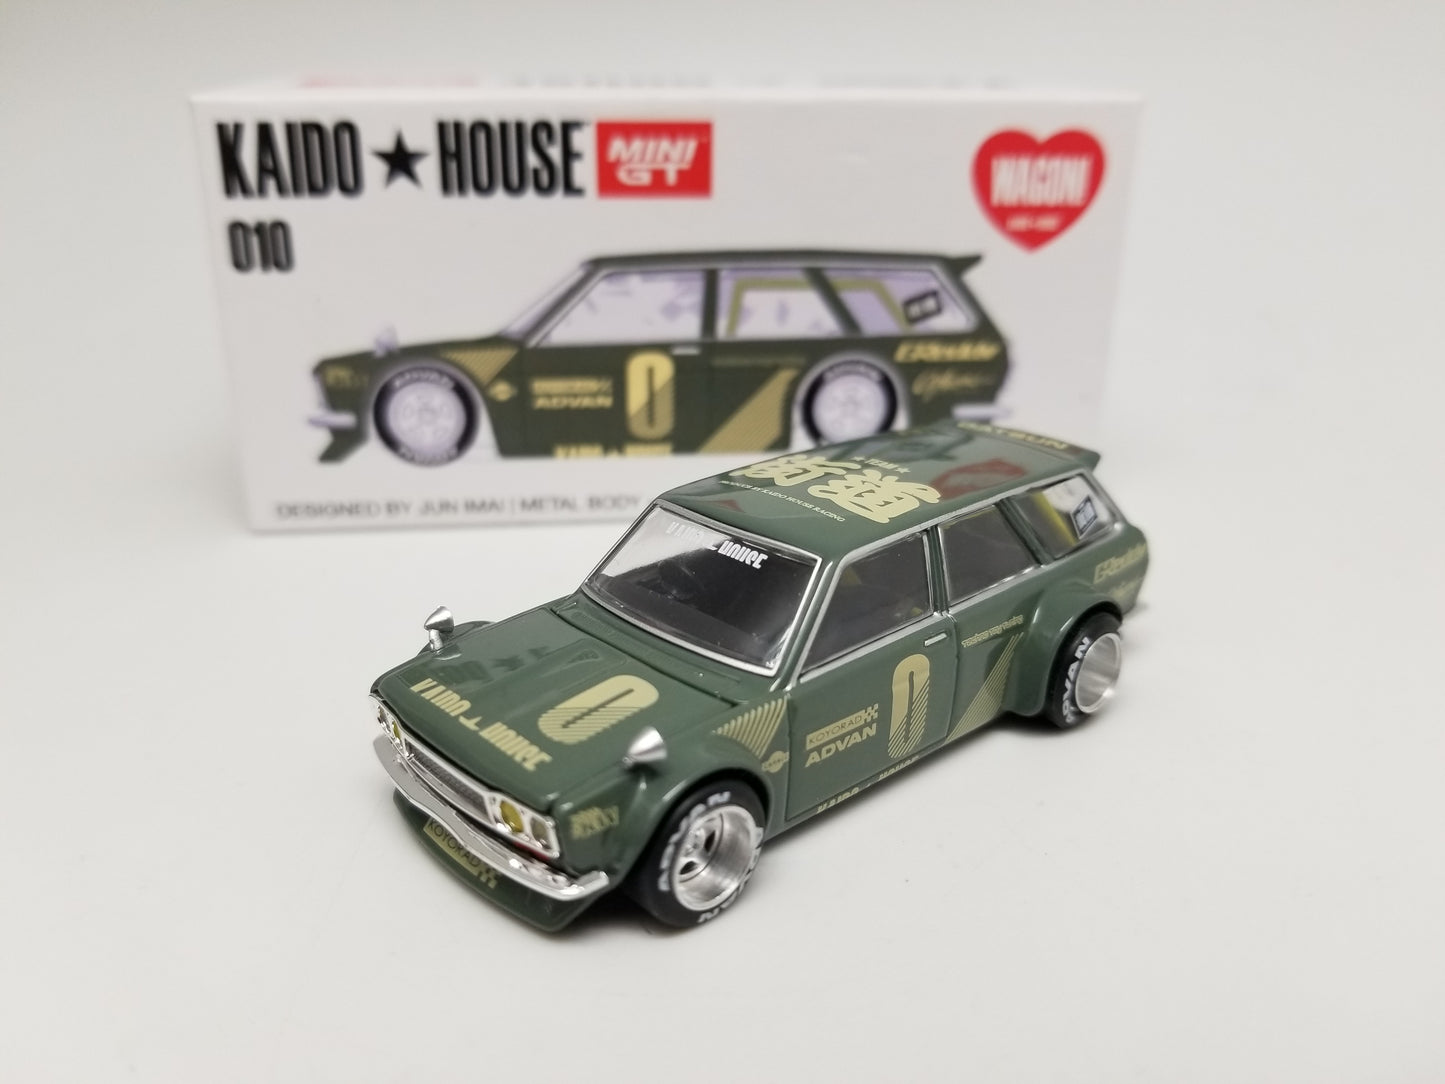 Kaido House 010 MiniGT - Datsun 510 Wagon - GREEN